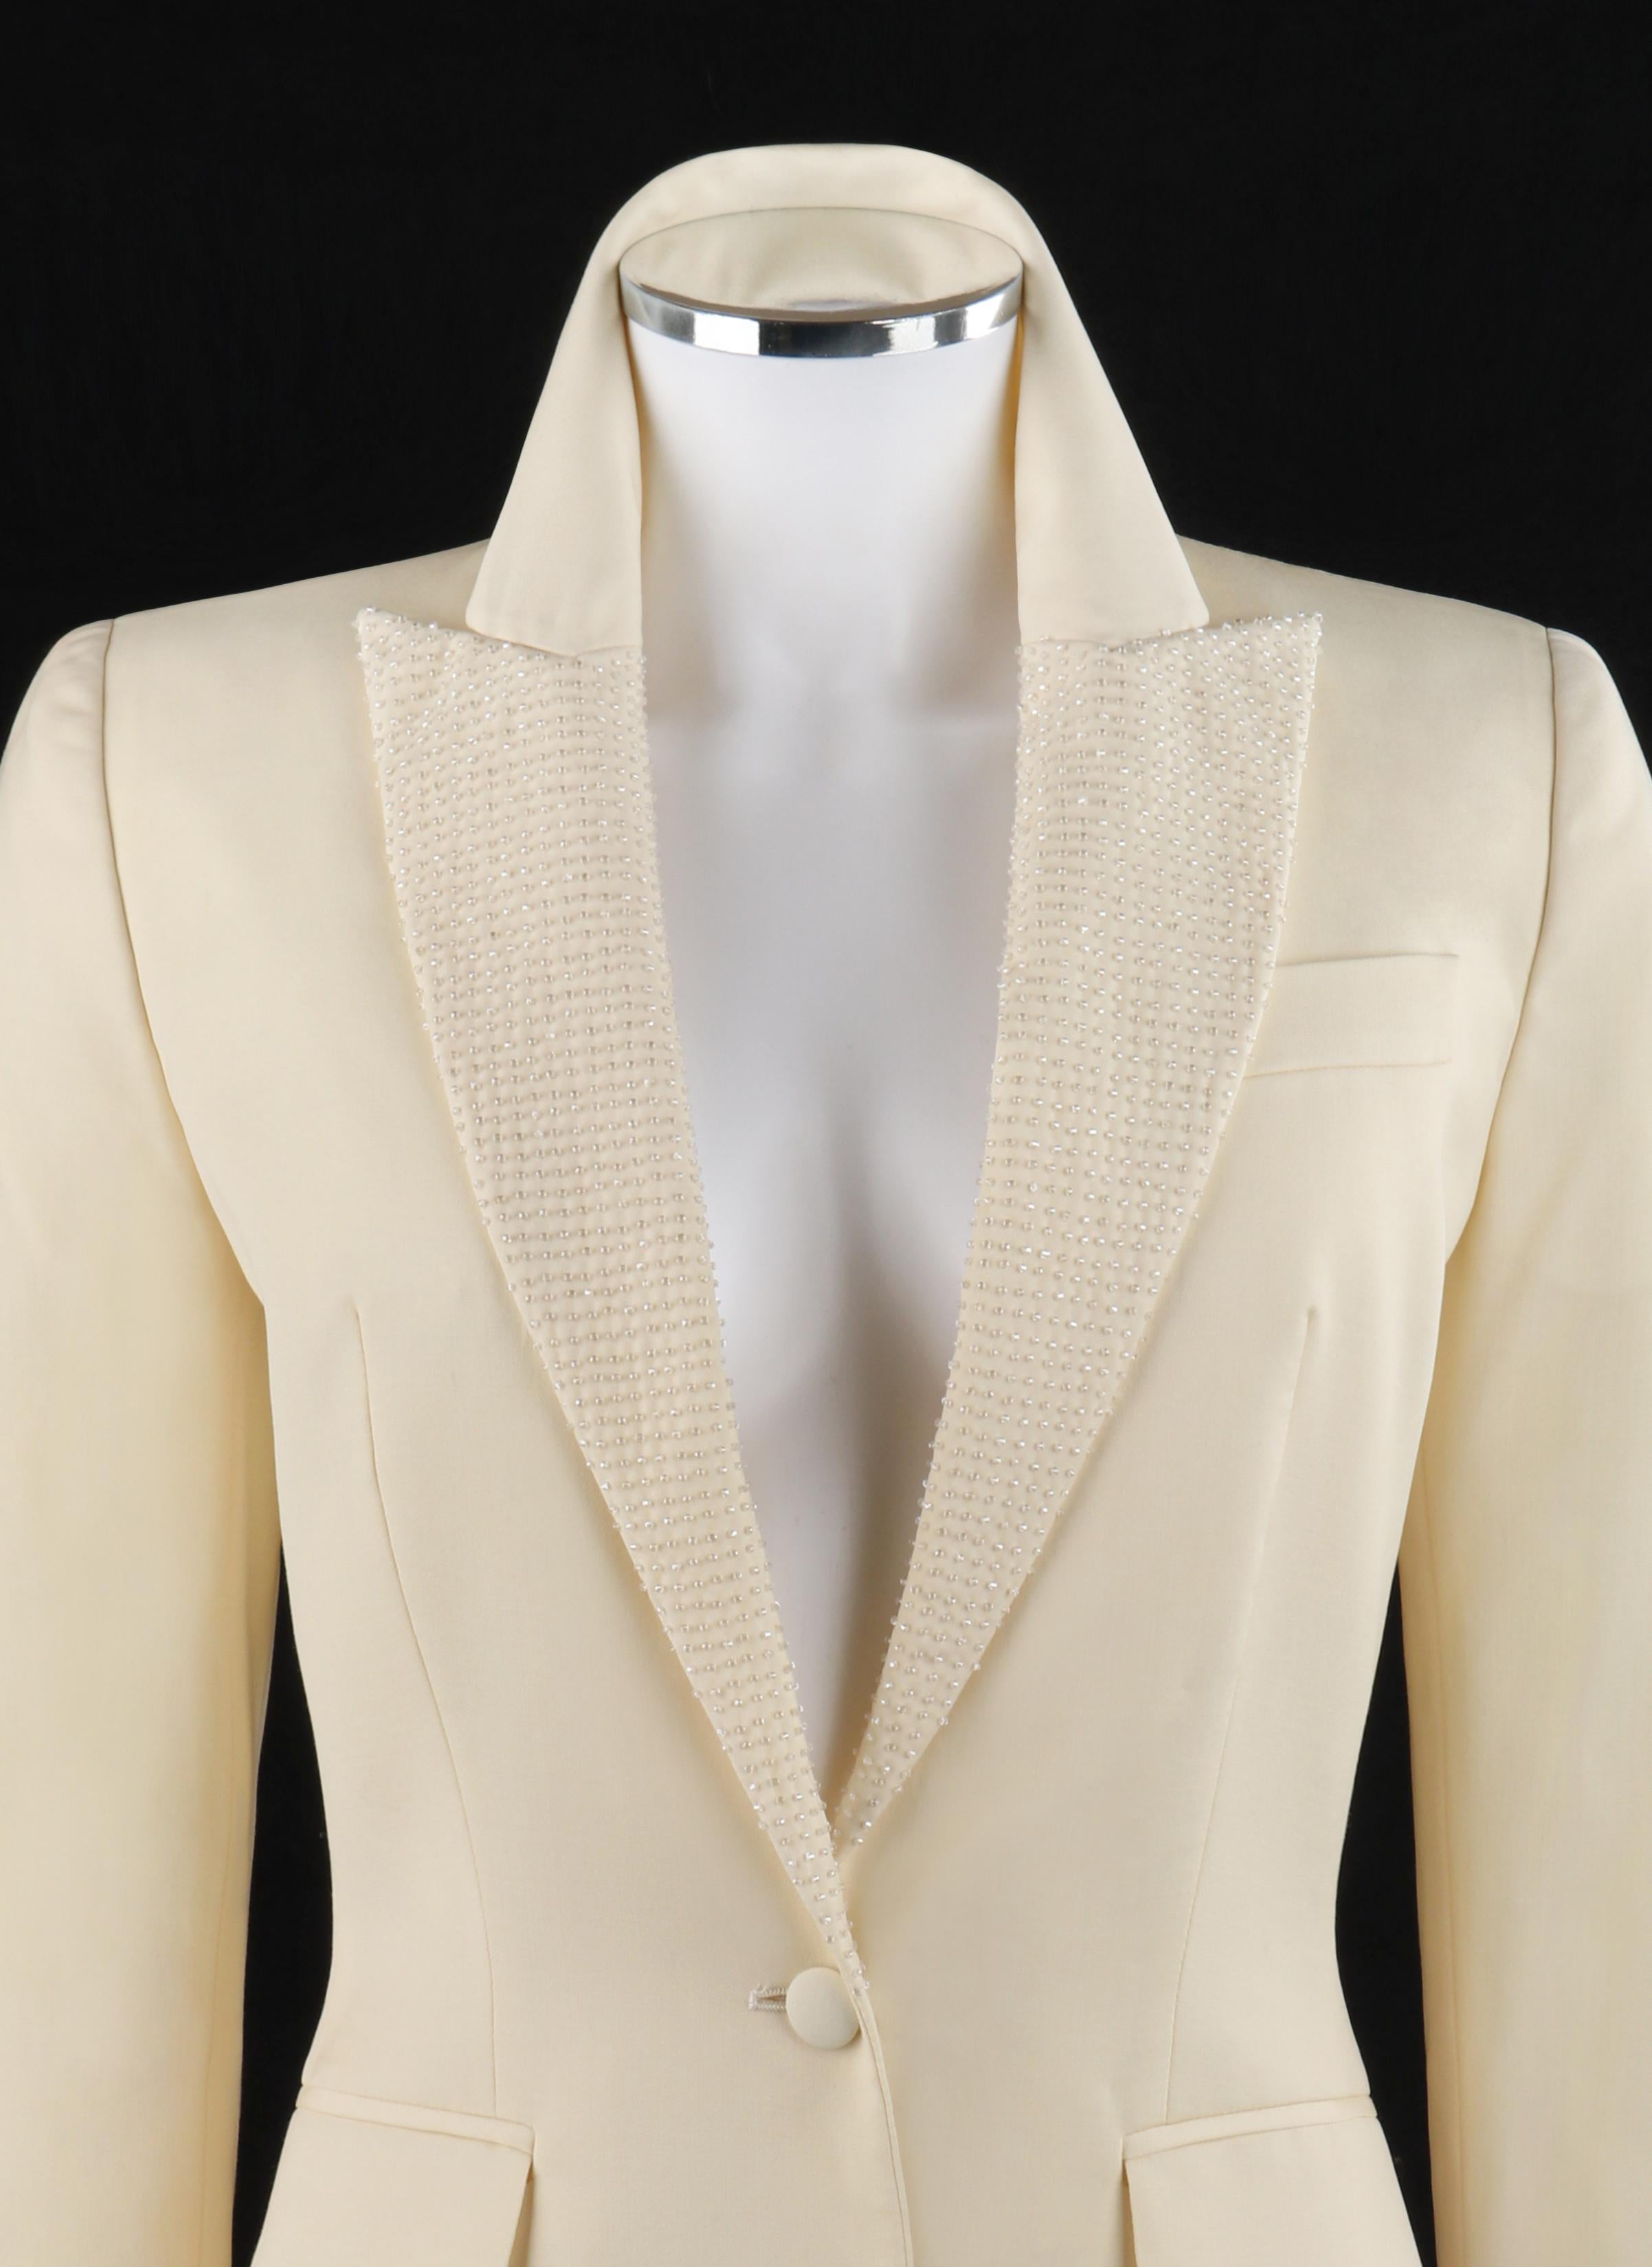 ALEXANDER McQUEEN S/S 1998 “Golden Shower” Light Yellow Beaded Blazer Jacket

Brand / Manufacturer: Alexander McQueen
Collection: S/S 1998 “Golden Shower”
Designer: Alexander McQueen
Style: Tailored blazer jacket
Color(s): Light yellow
Lined: